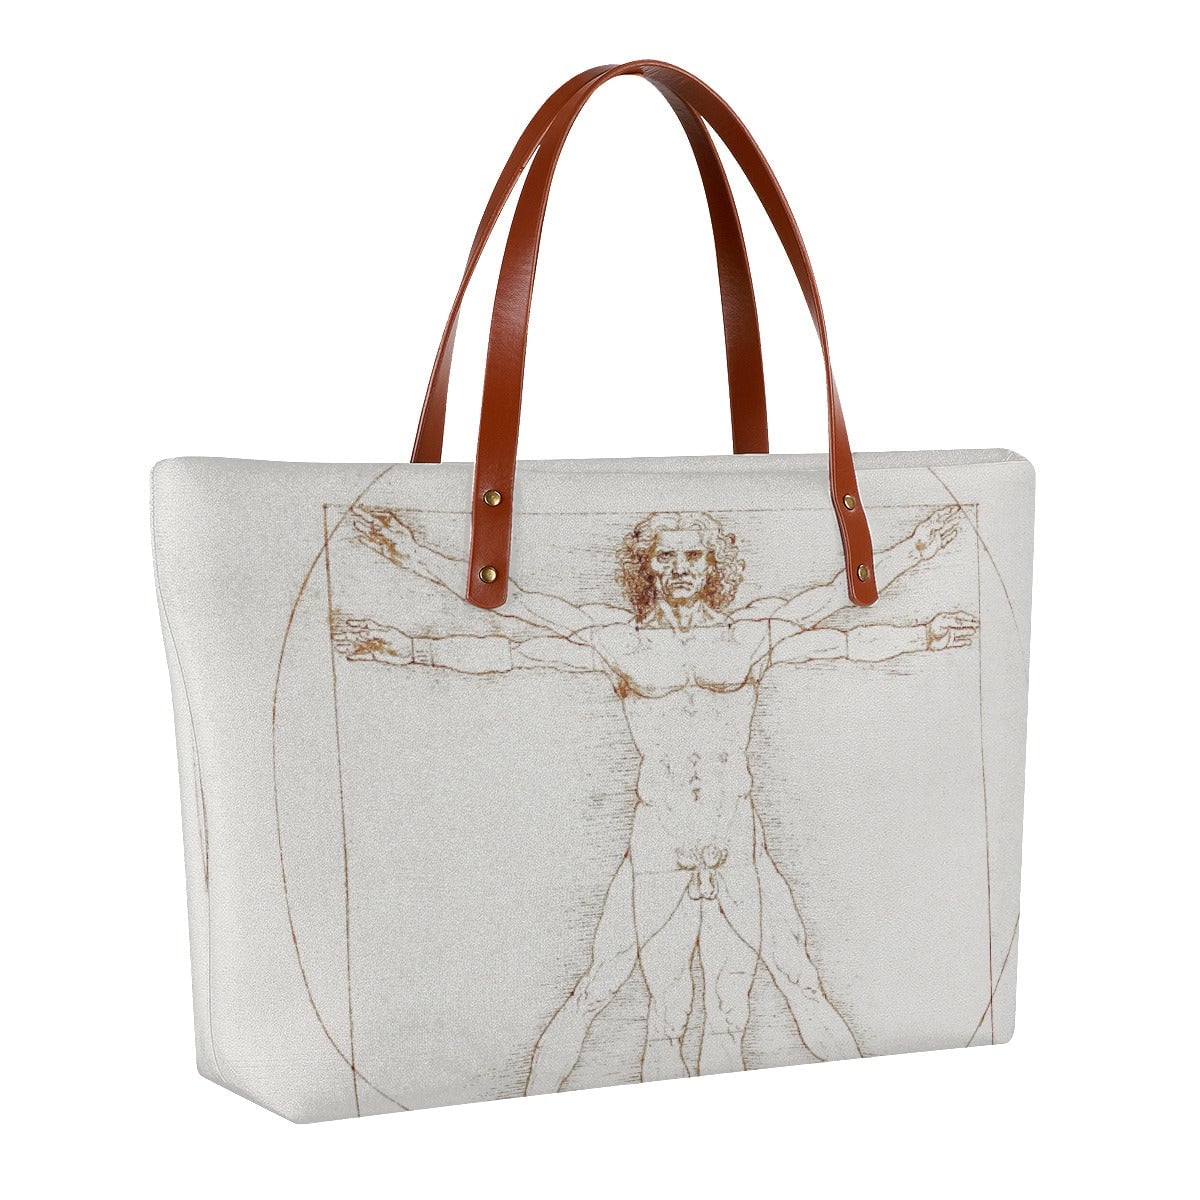 Leonardo da Vinci’s Vitruvian Man Art Tote Bag